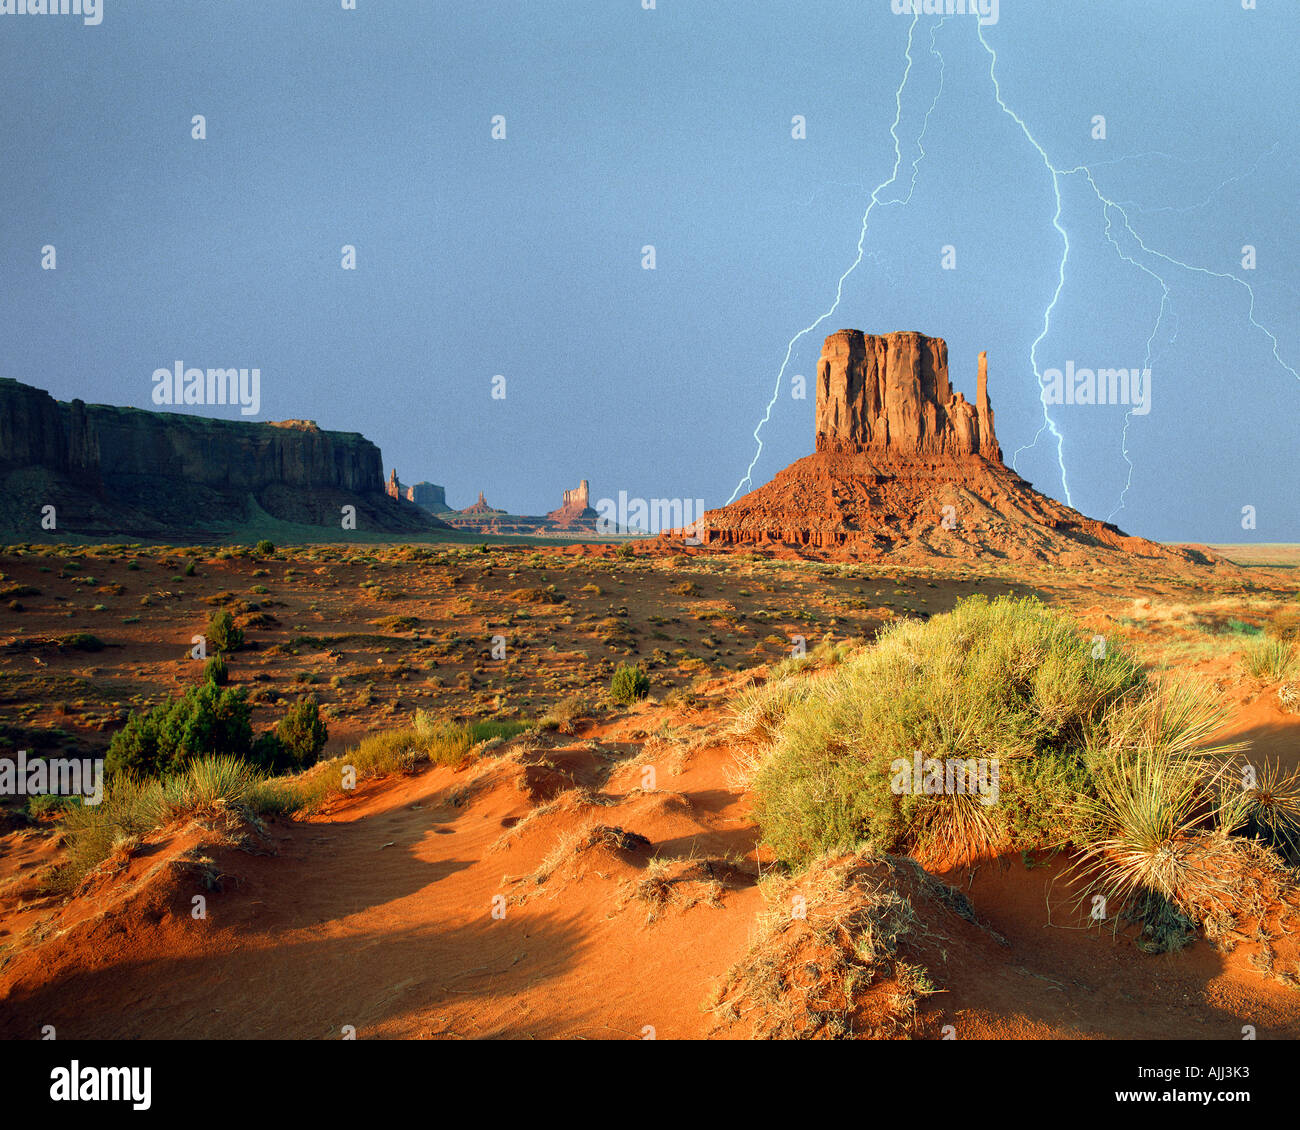 USA - ARIZONA: Lightning über Monument Valley Navajo Tribal Park Stockfoto